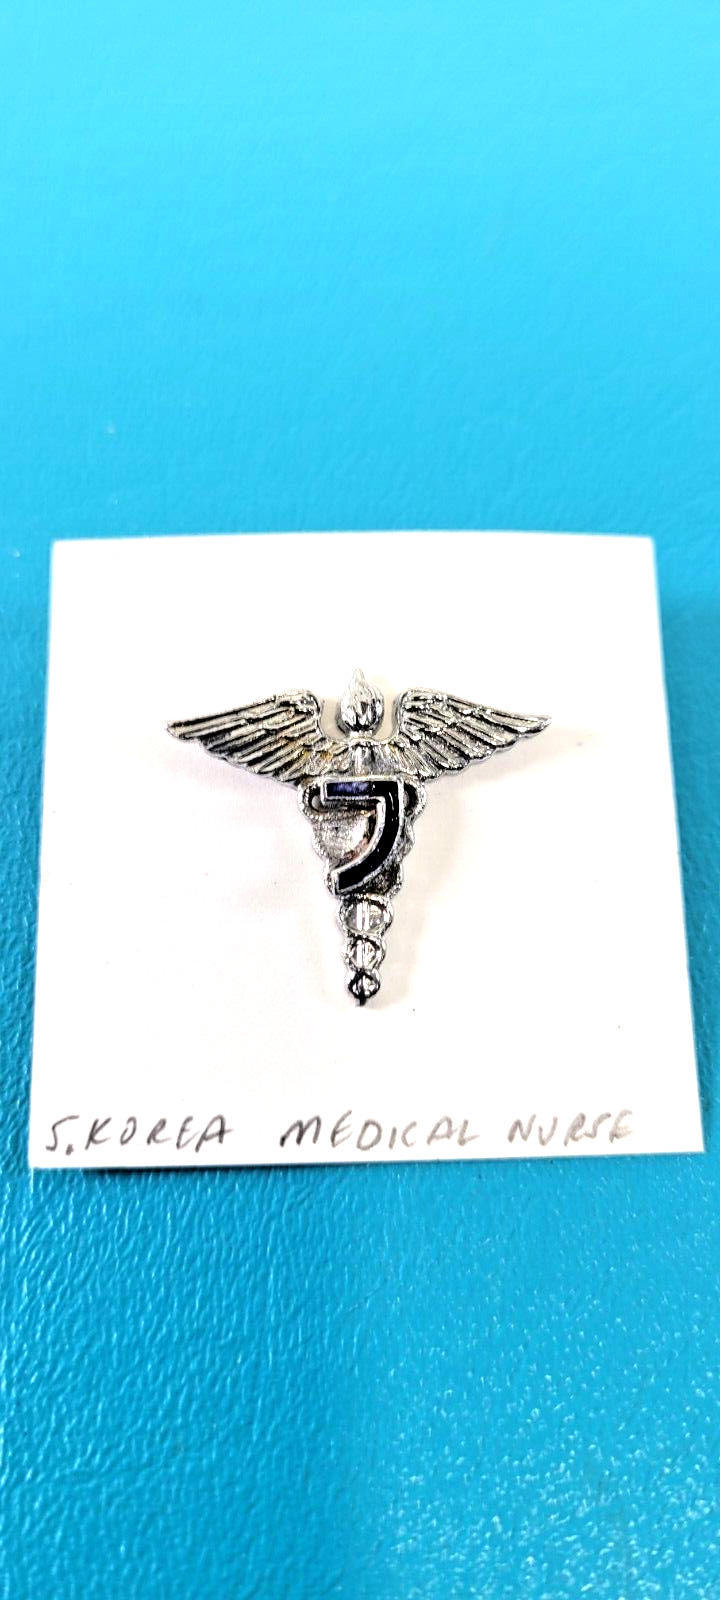 Vintage South Korea Medical Nurse Corps Military Pin Medal Lapel